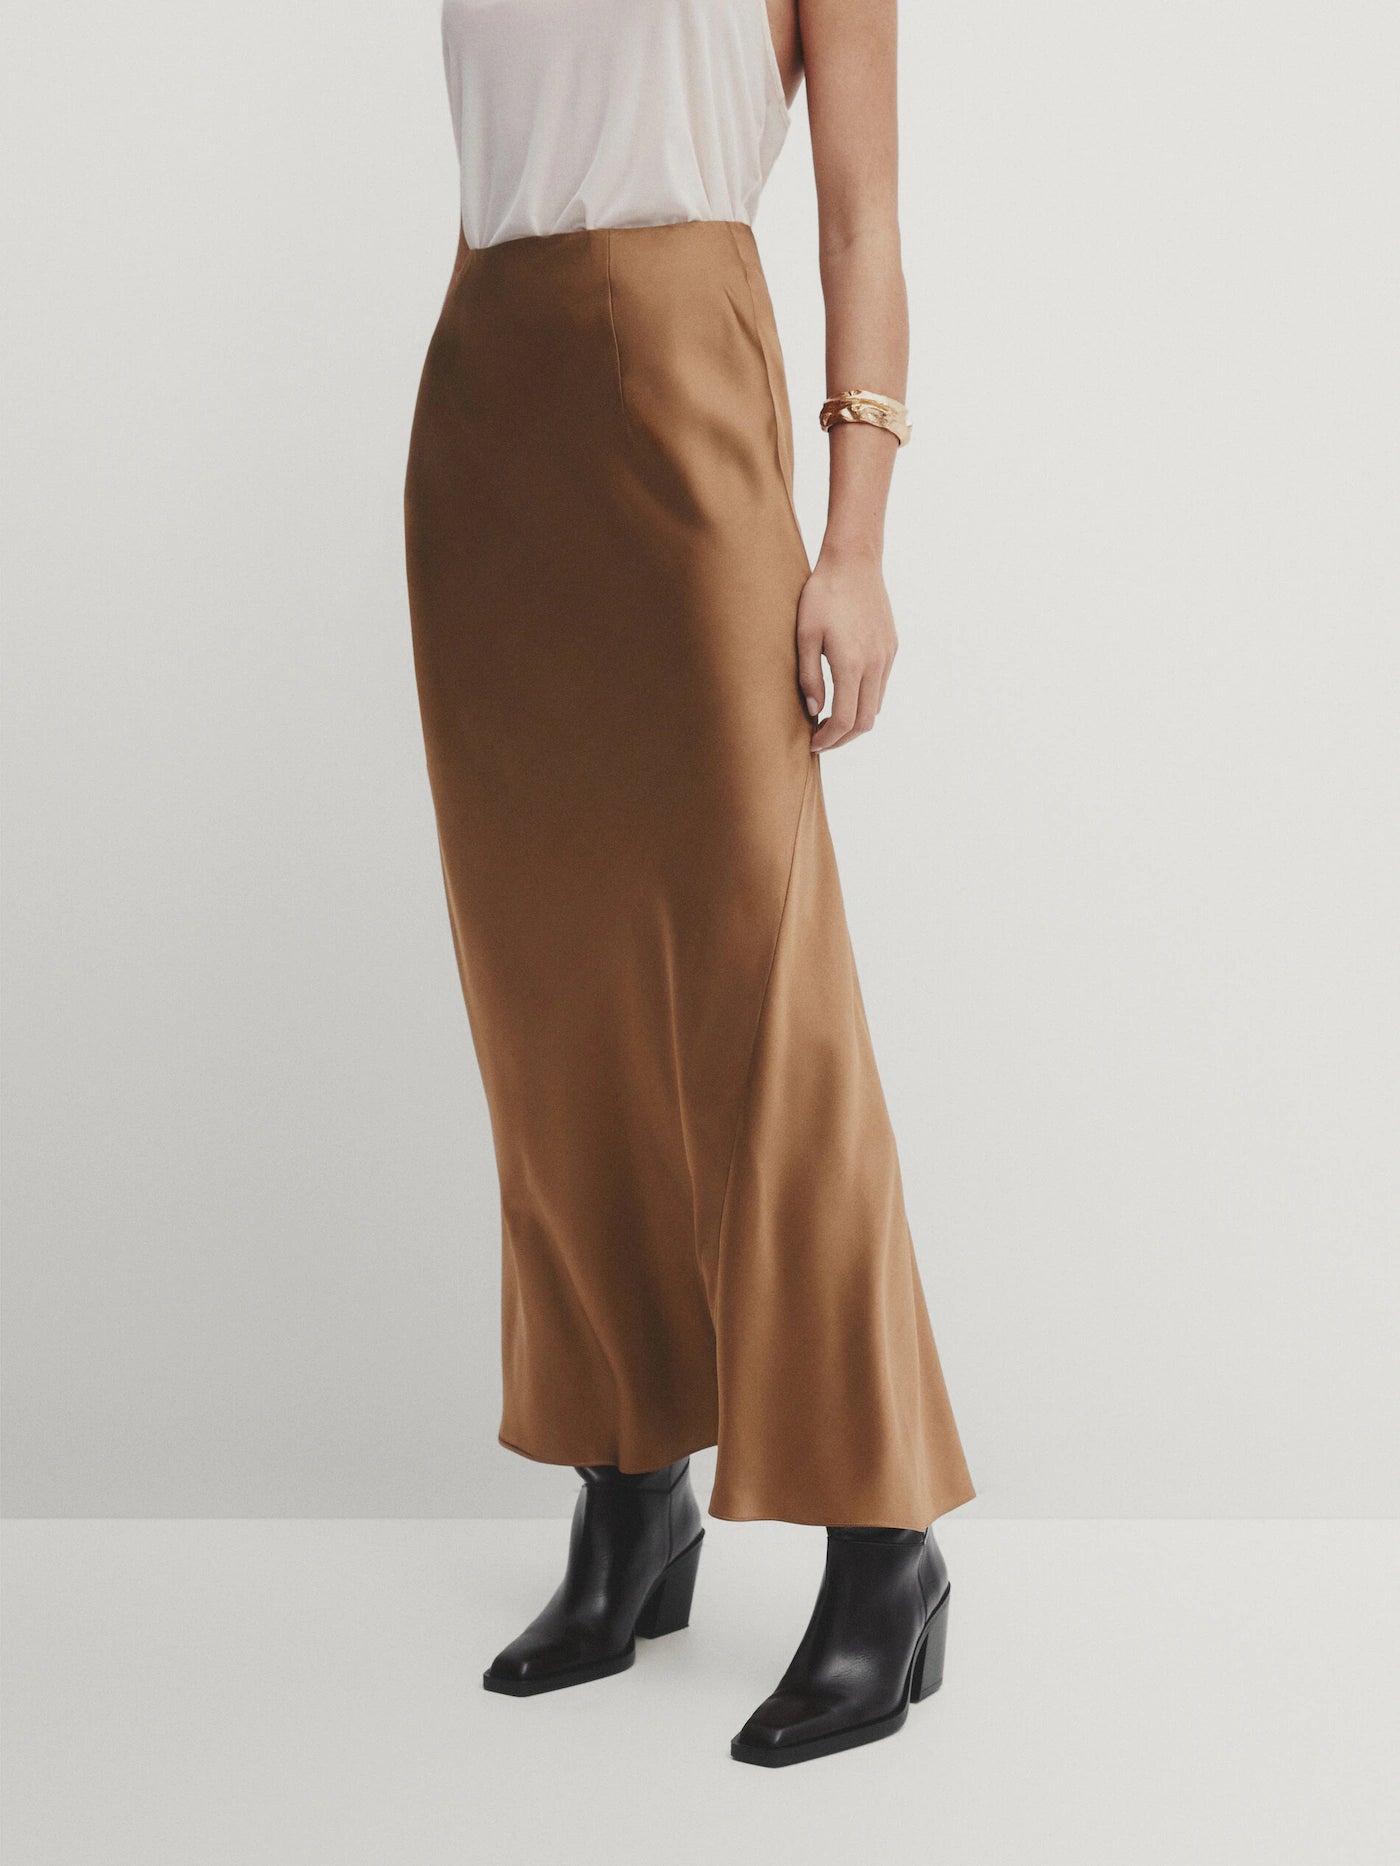 Long satin-finish silk skirt